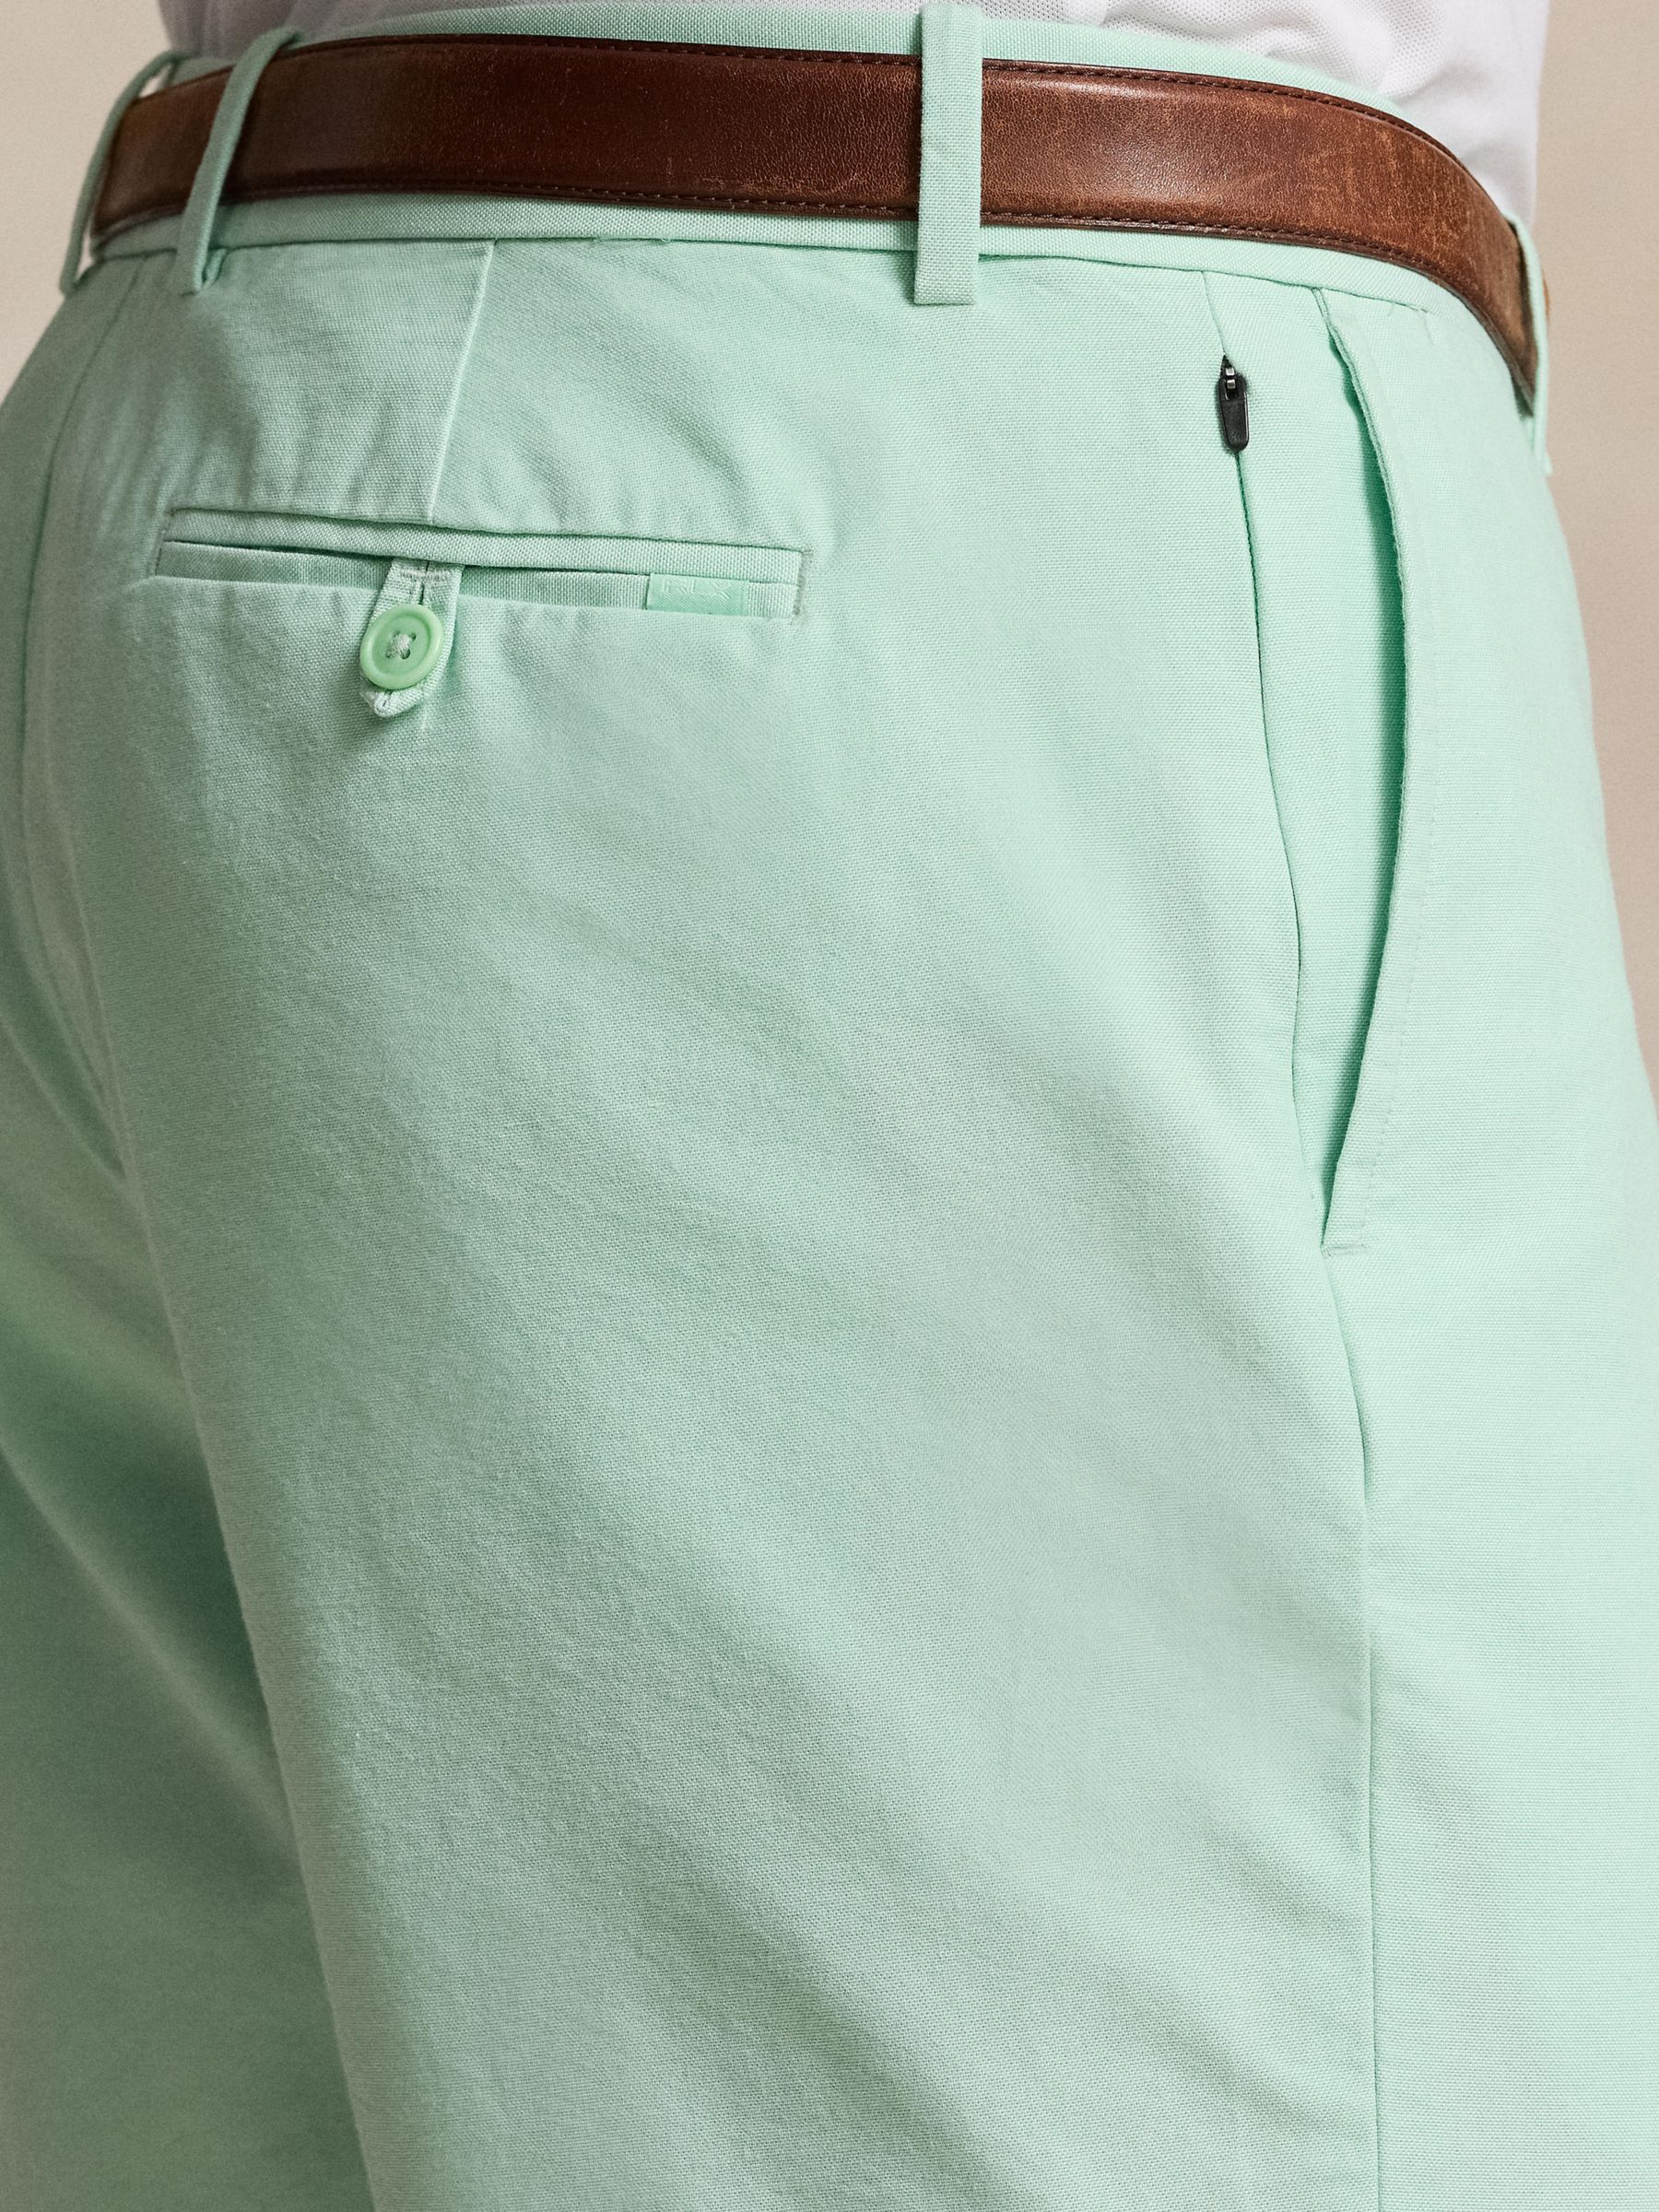 Ralph Lauren 9-Inch Tailored Fit Performance Shorts, Pastel Mint, 32R